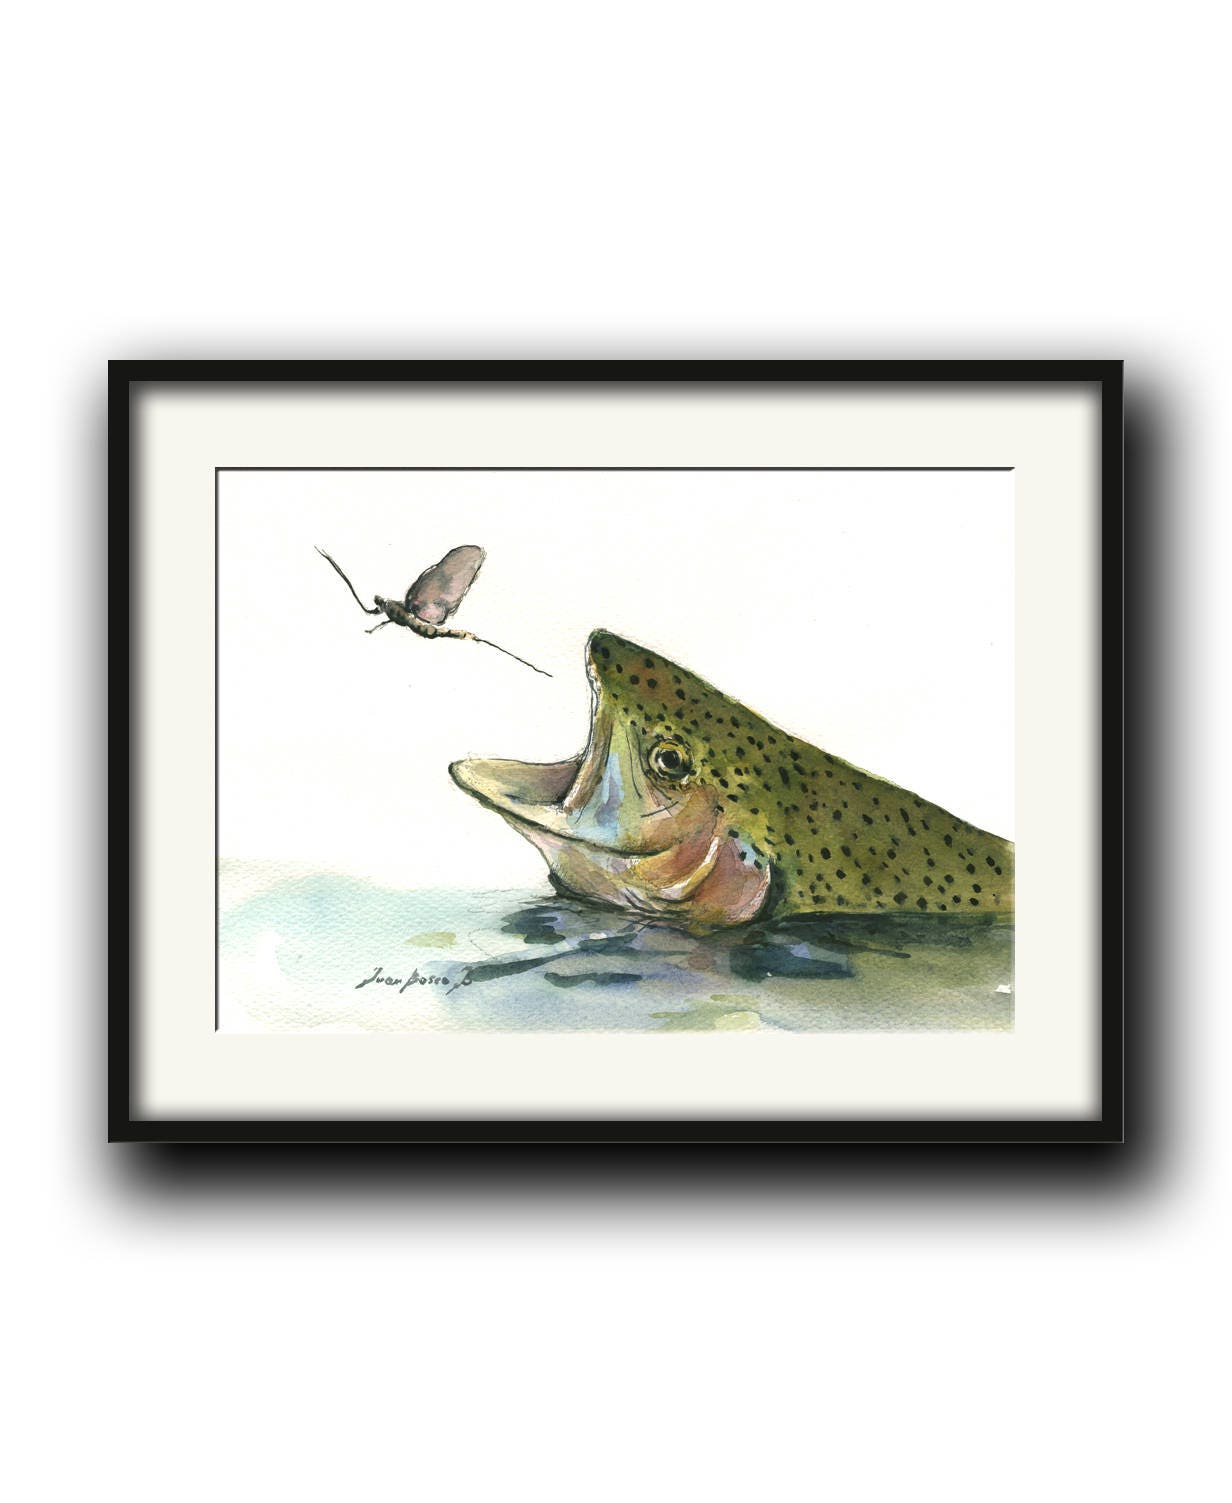 Print-rainbow Trout Fish Eating Mayfly Fly Fishing River Print